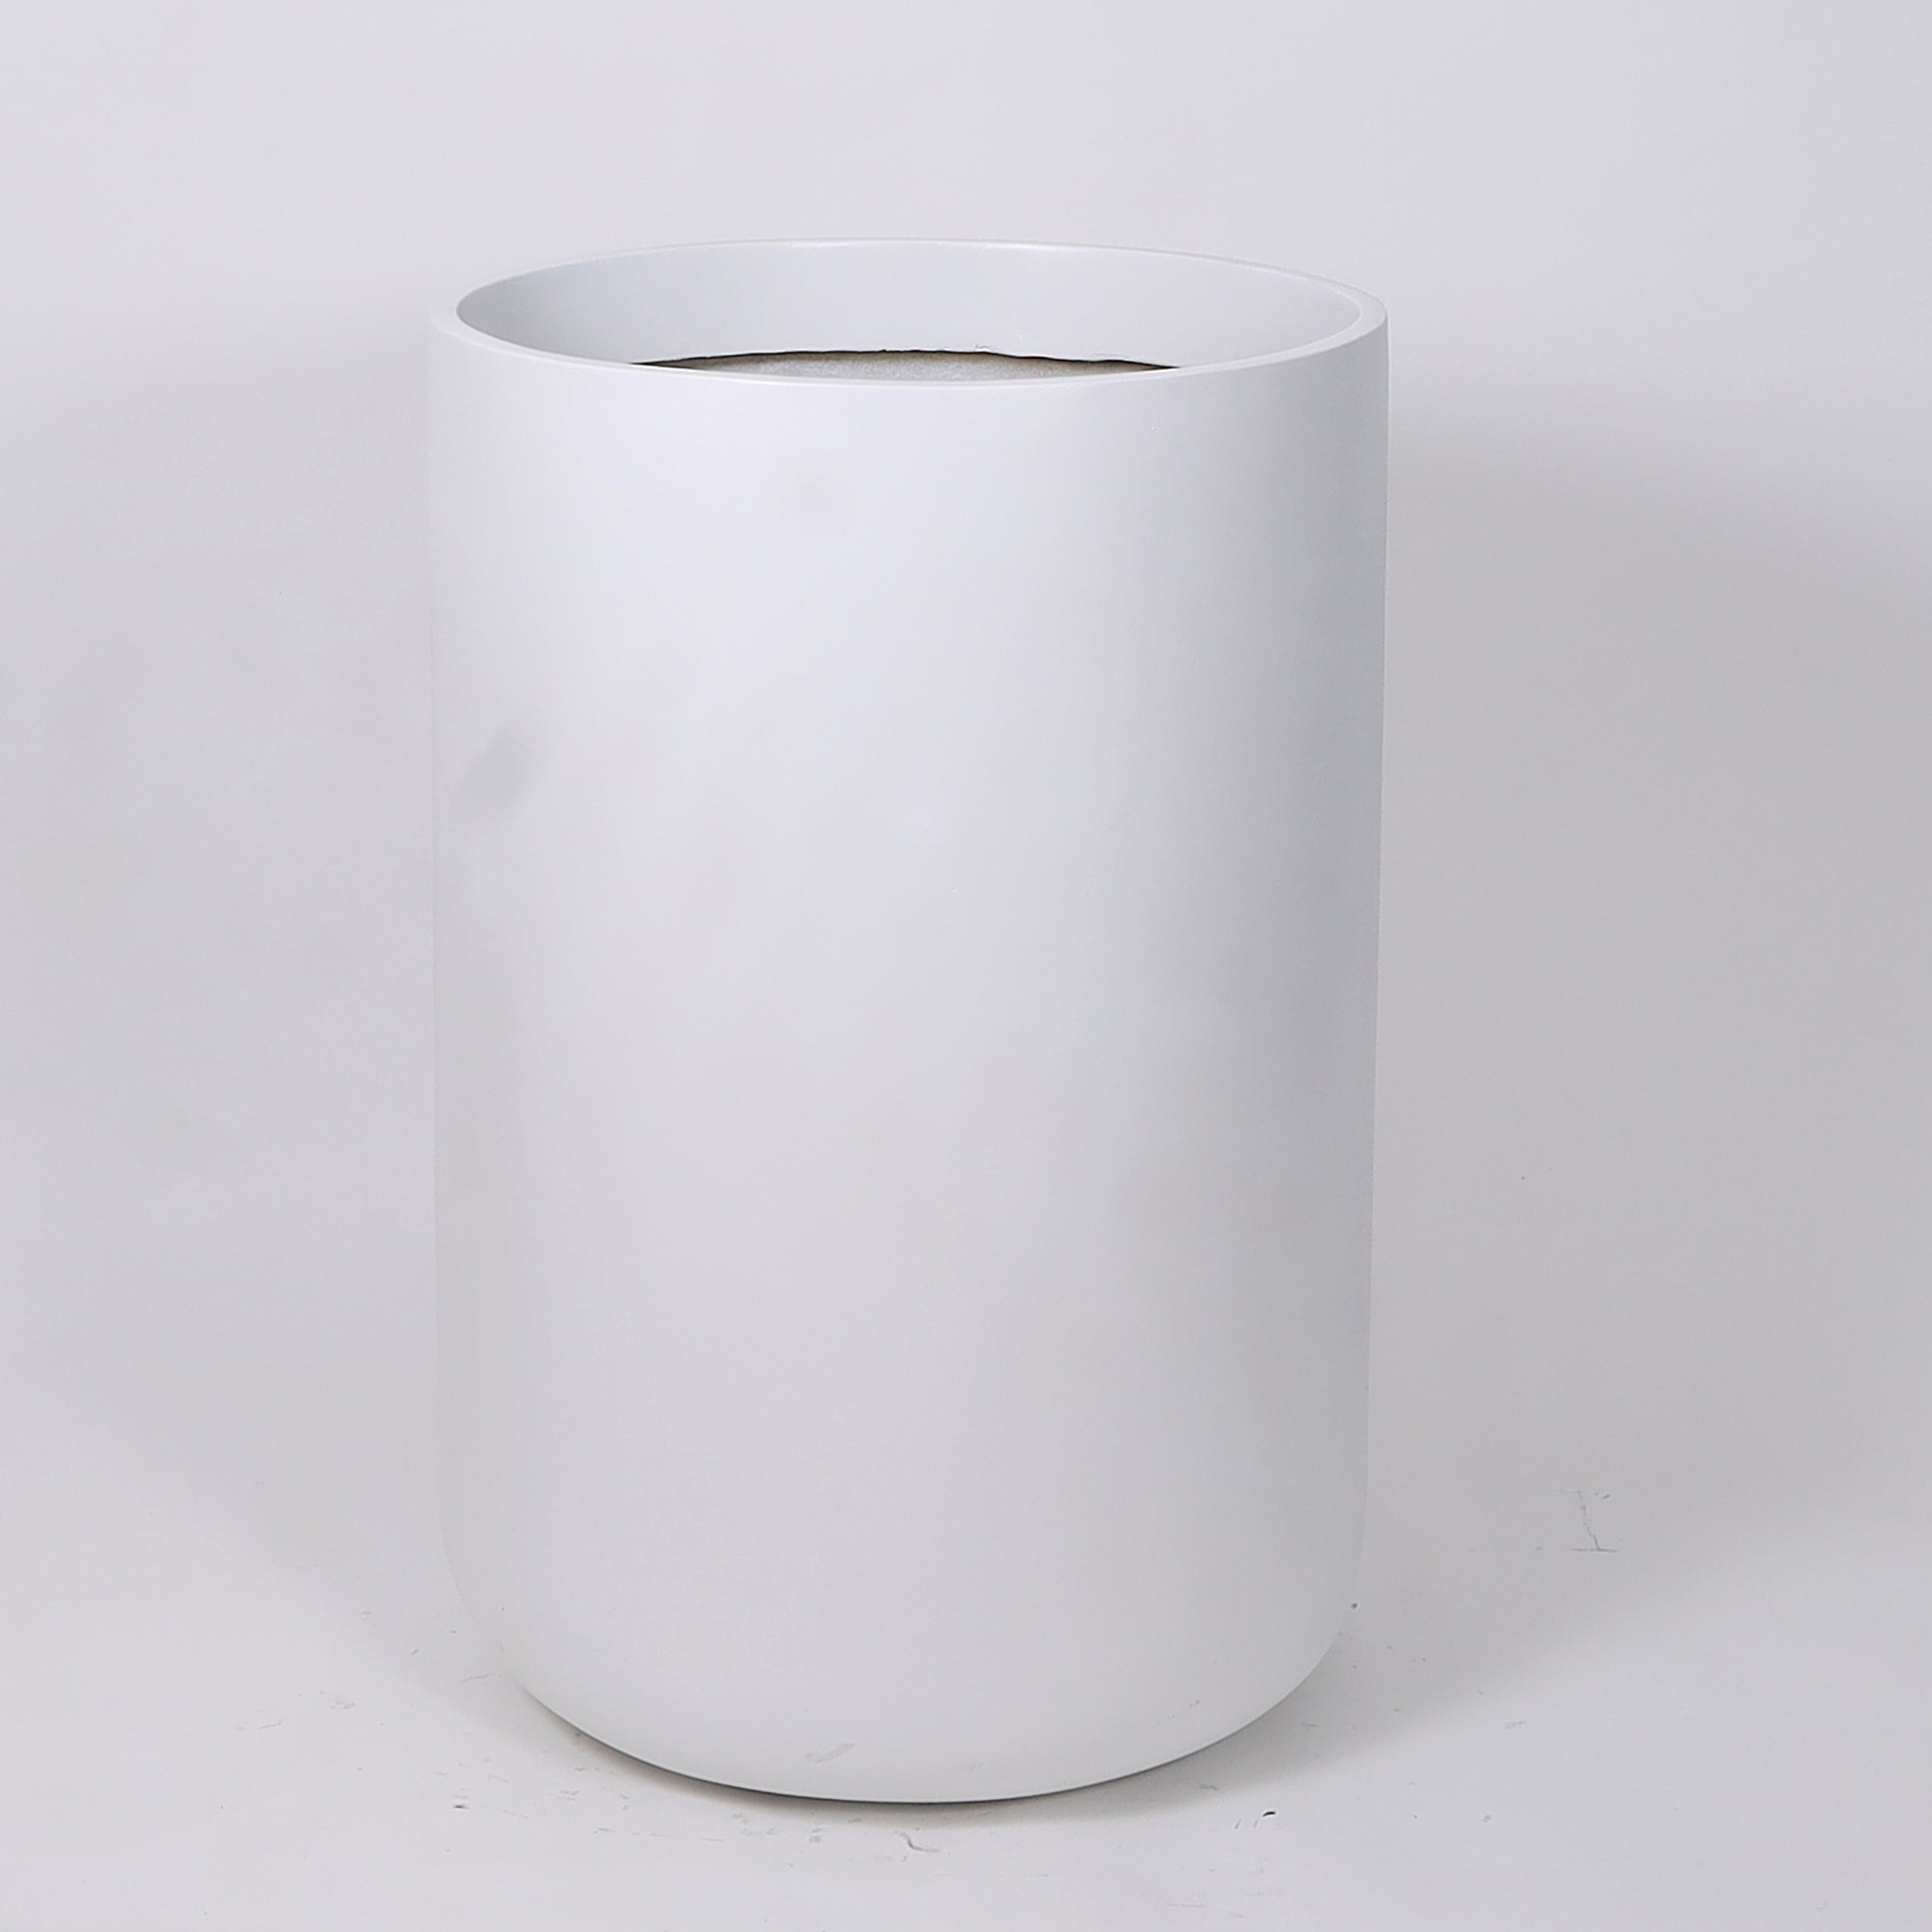 Large Pot - fiberglass - lightweight 23 to 63 diameters